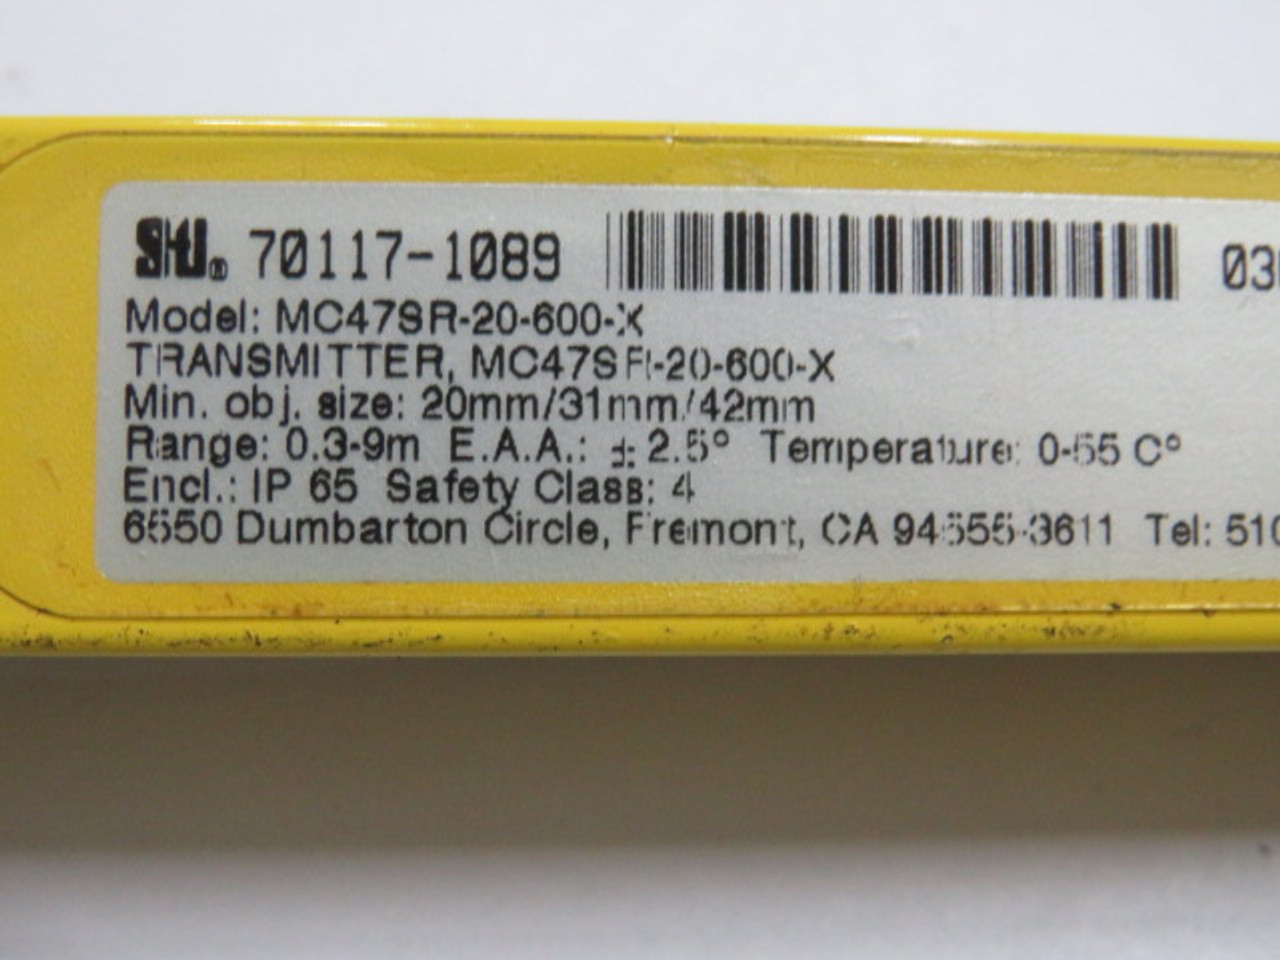 STI MC47SR-20-600-X Light Curtain Transmitter 0.3-9m Range USED